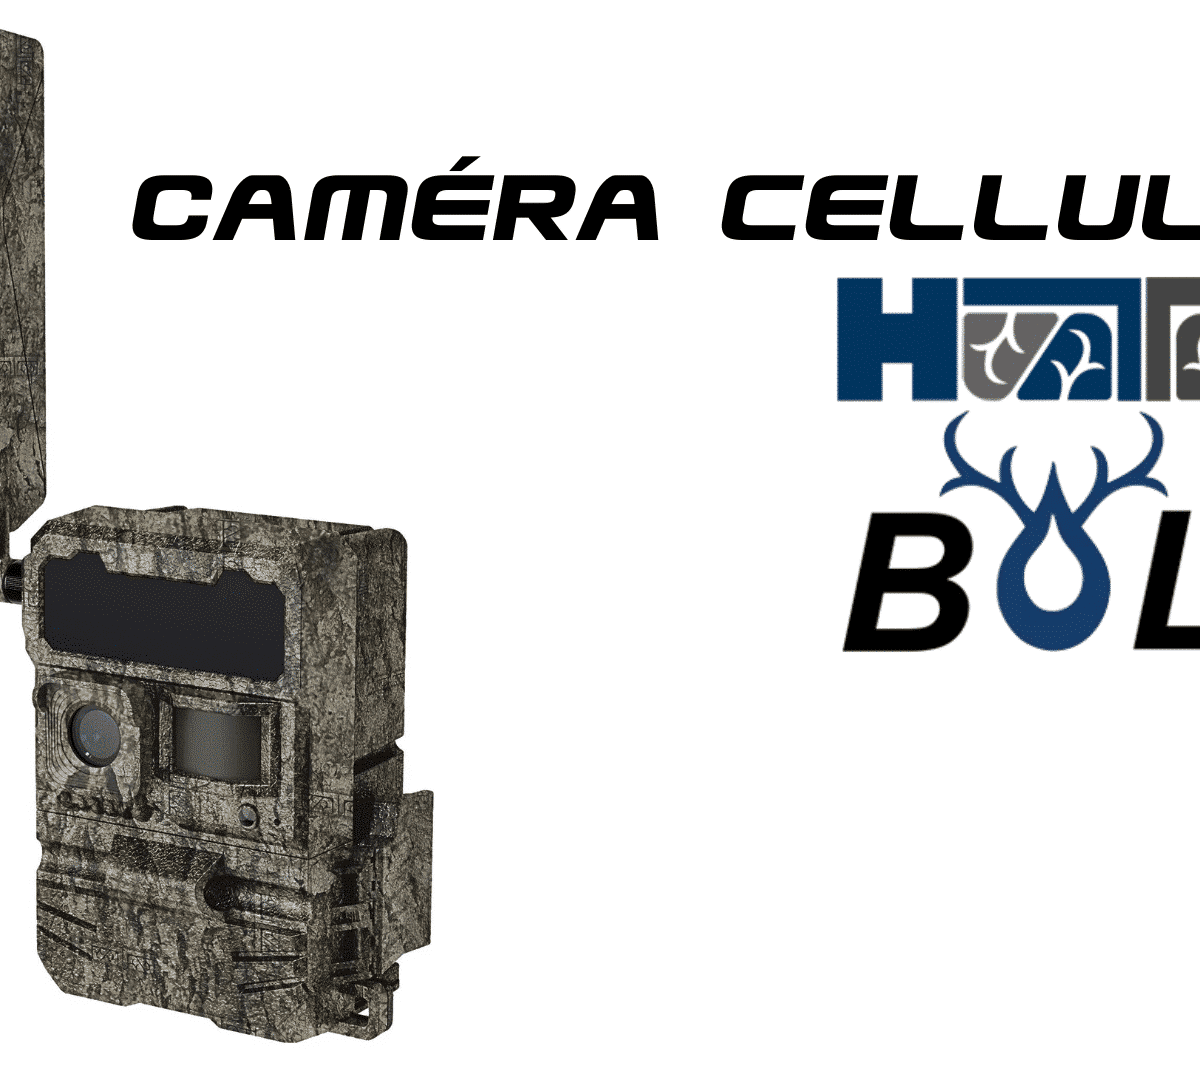 Camera-cellulaire